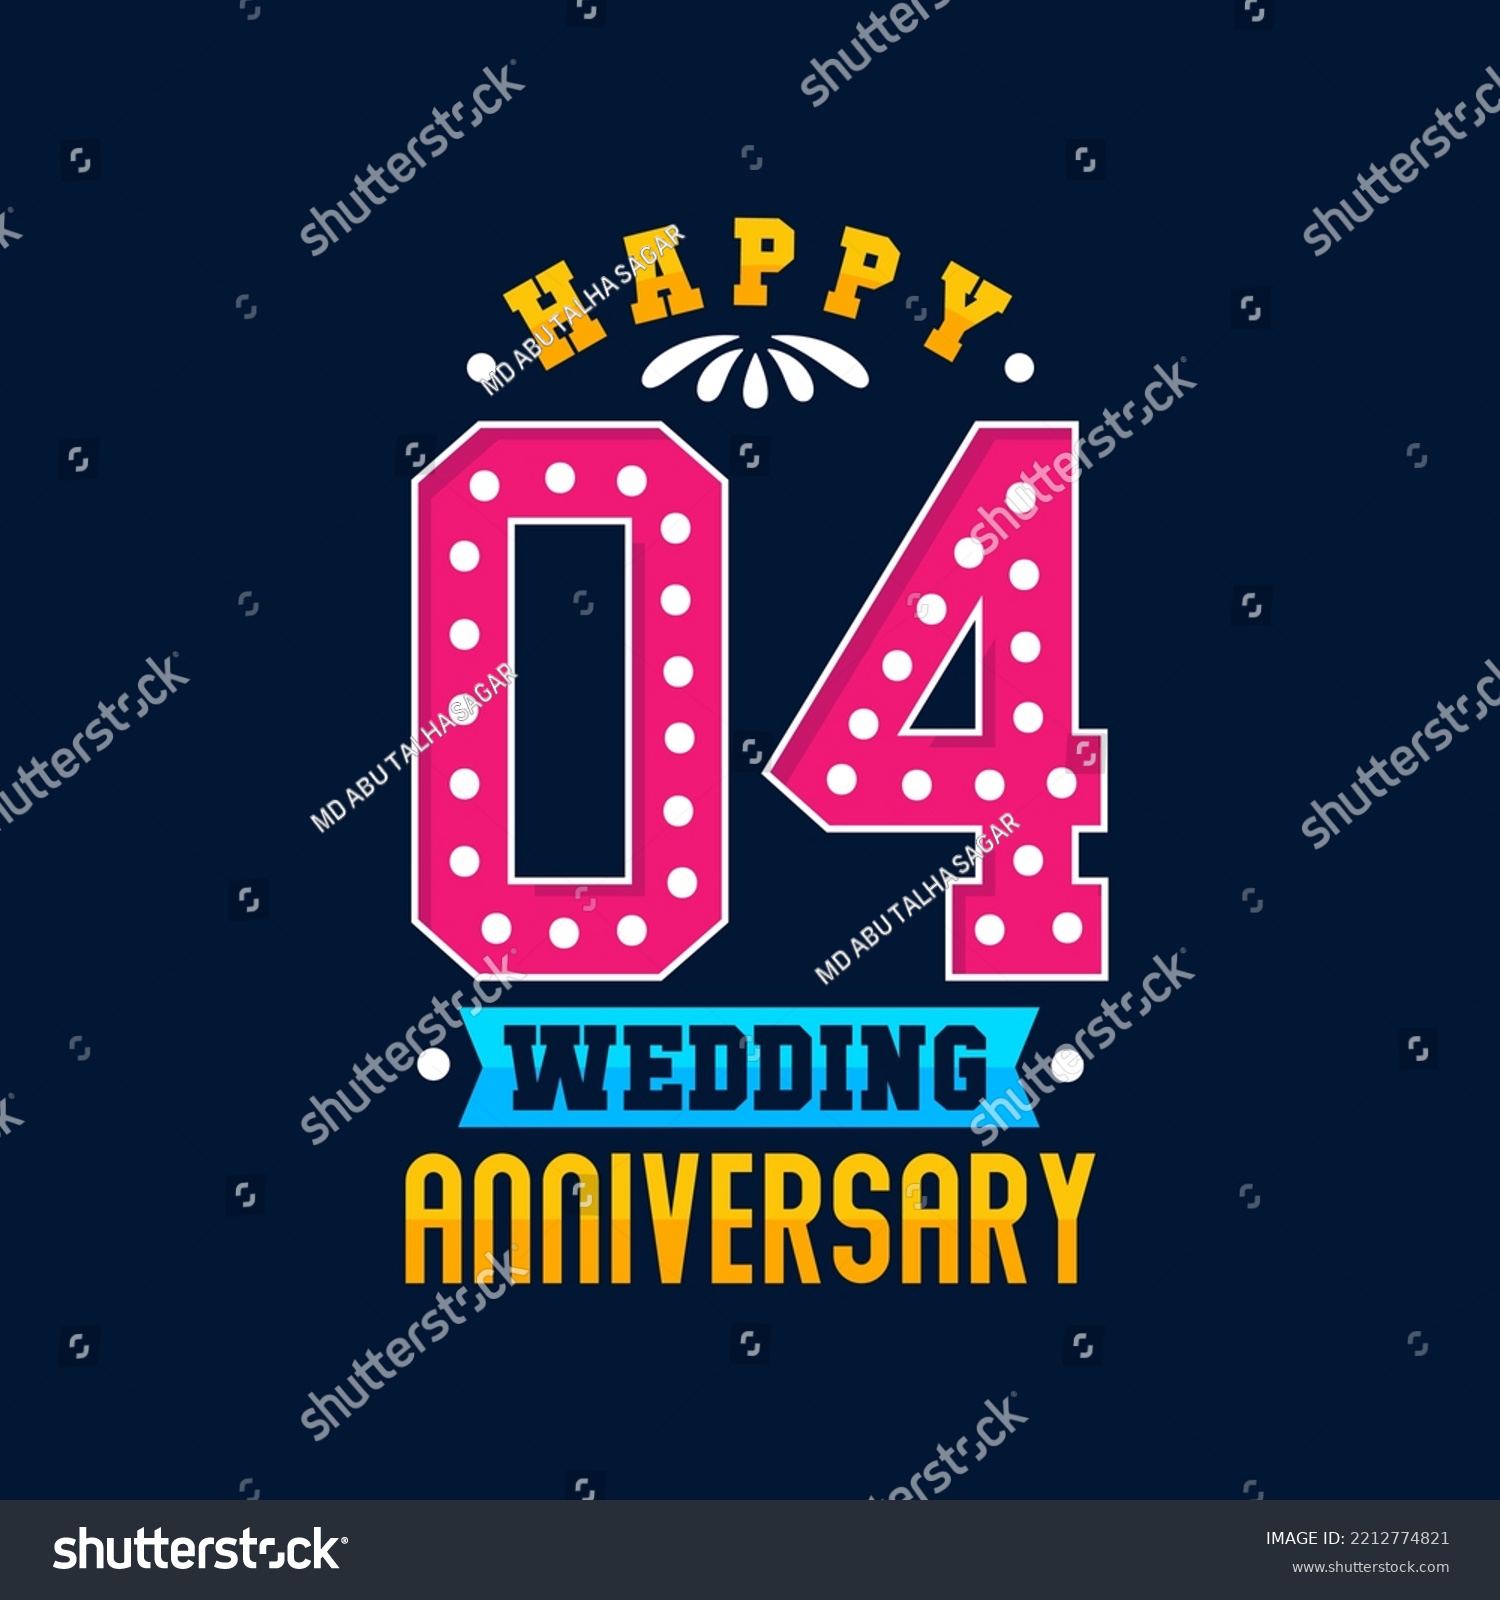 SVG of Happy 4th Wedding Anniversary celebration svg